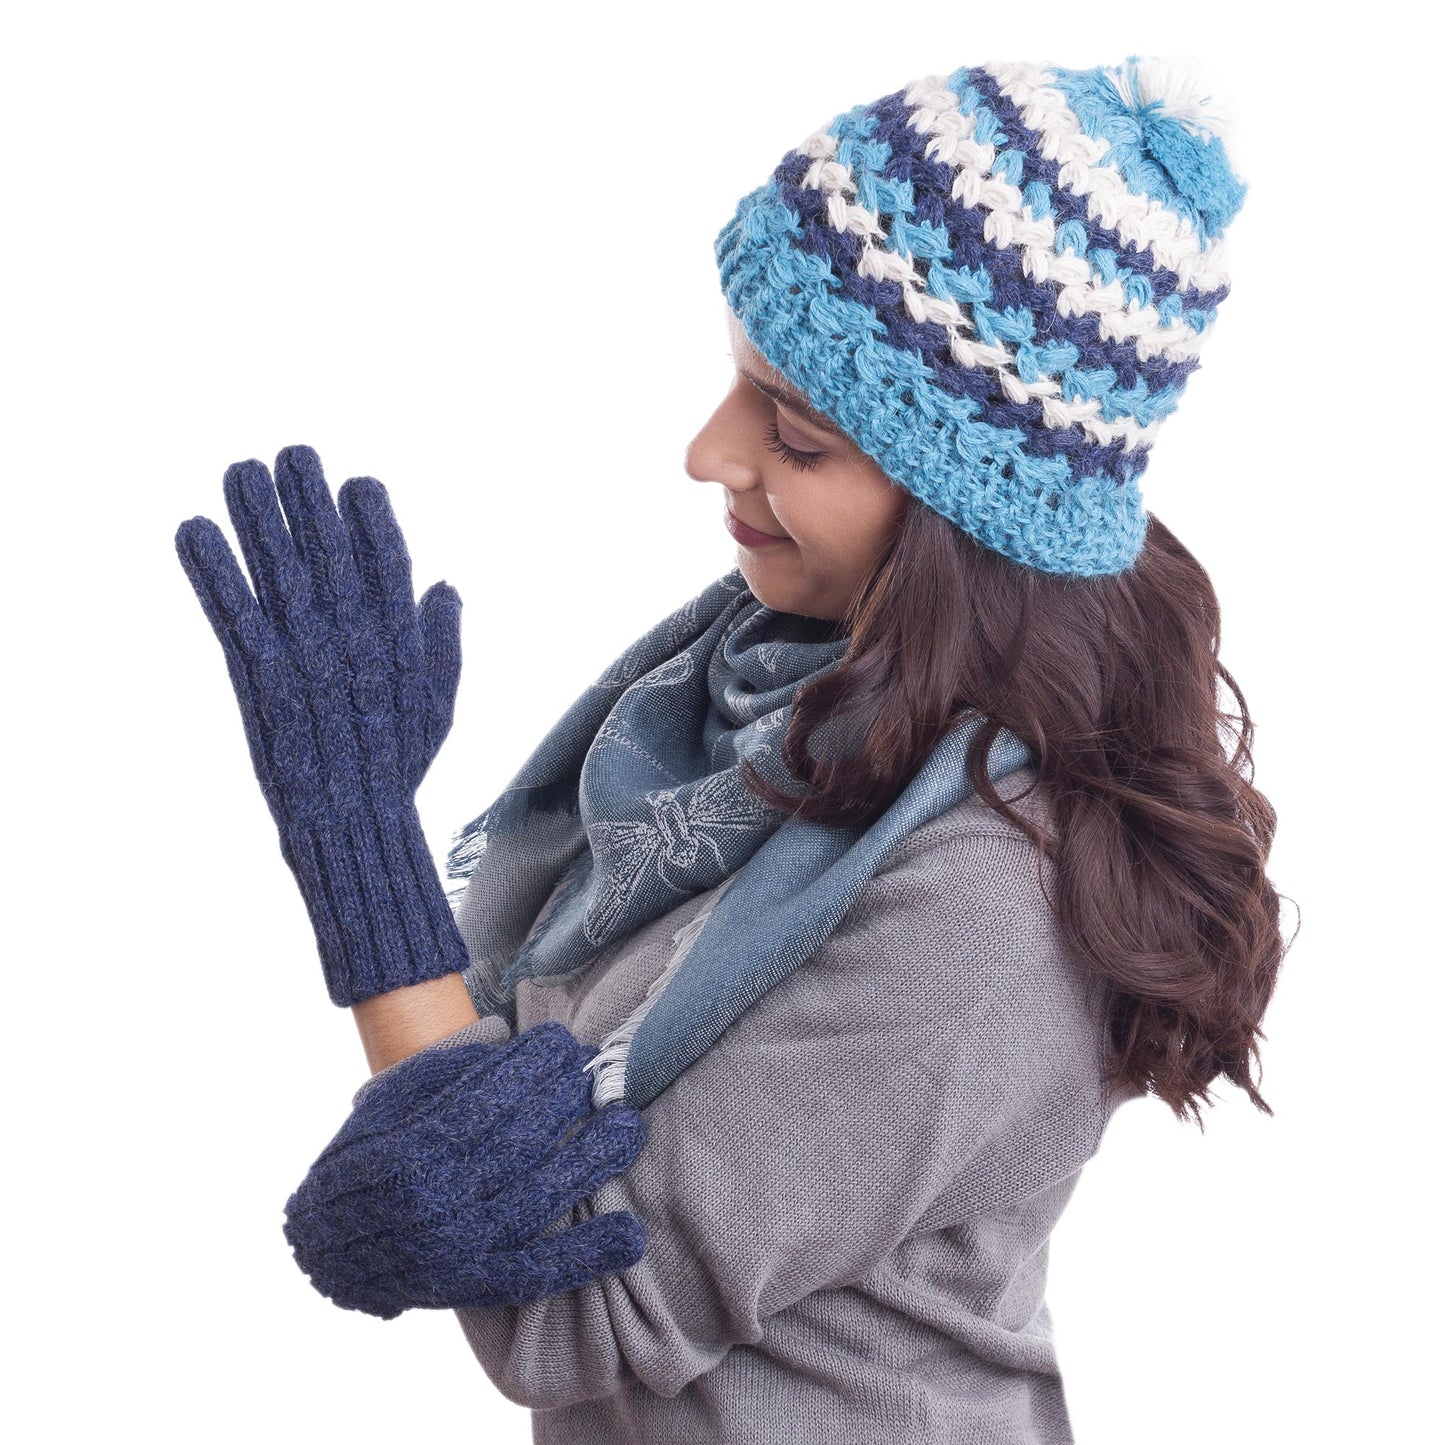 Winter Delight in Indigo 100% Alpaca Gloves in Indigo from Peru